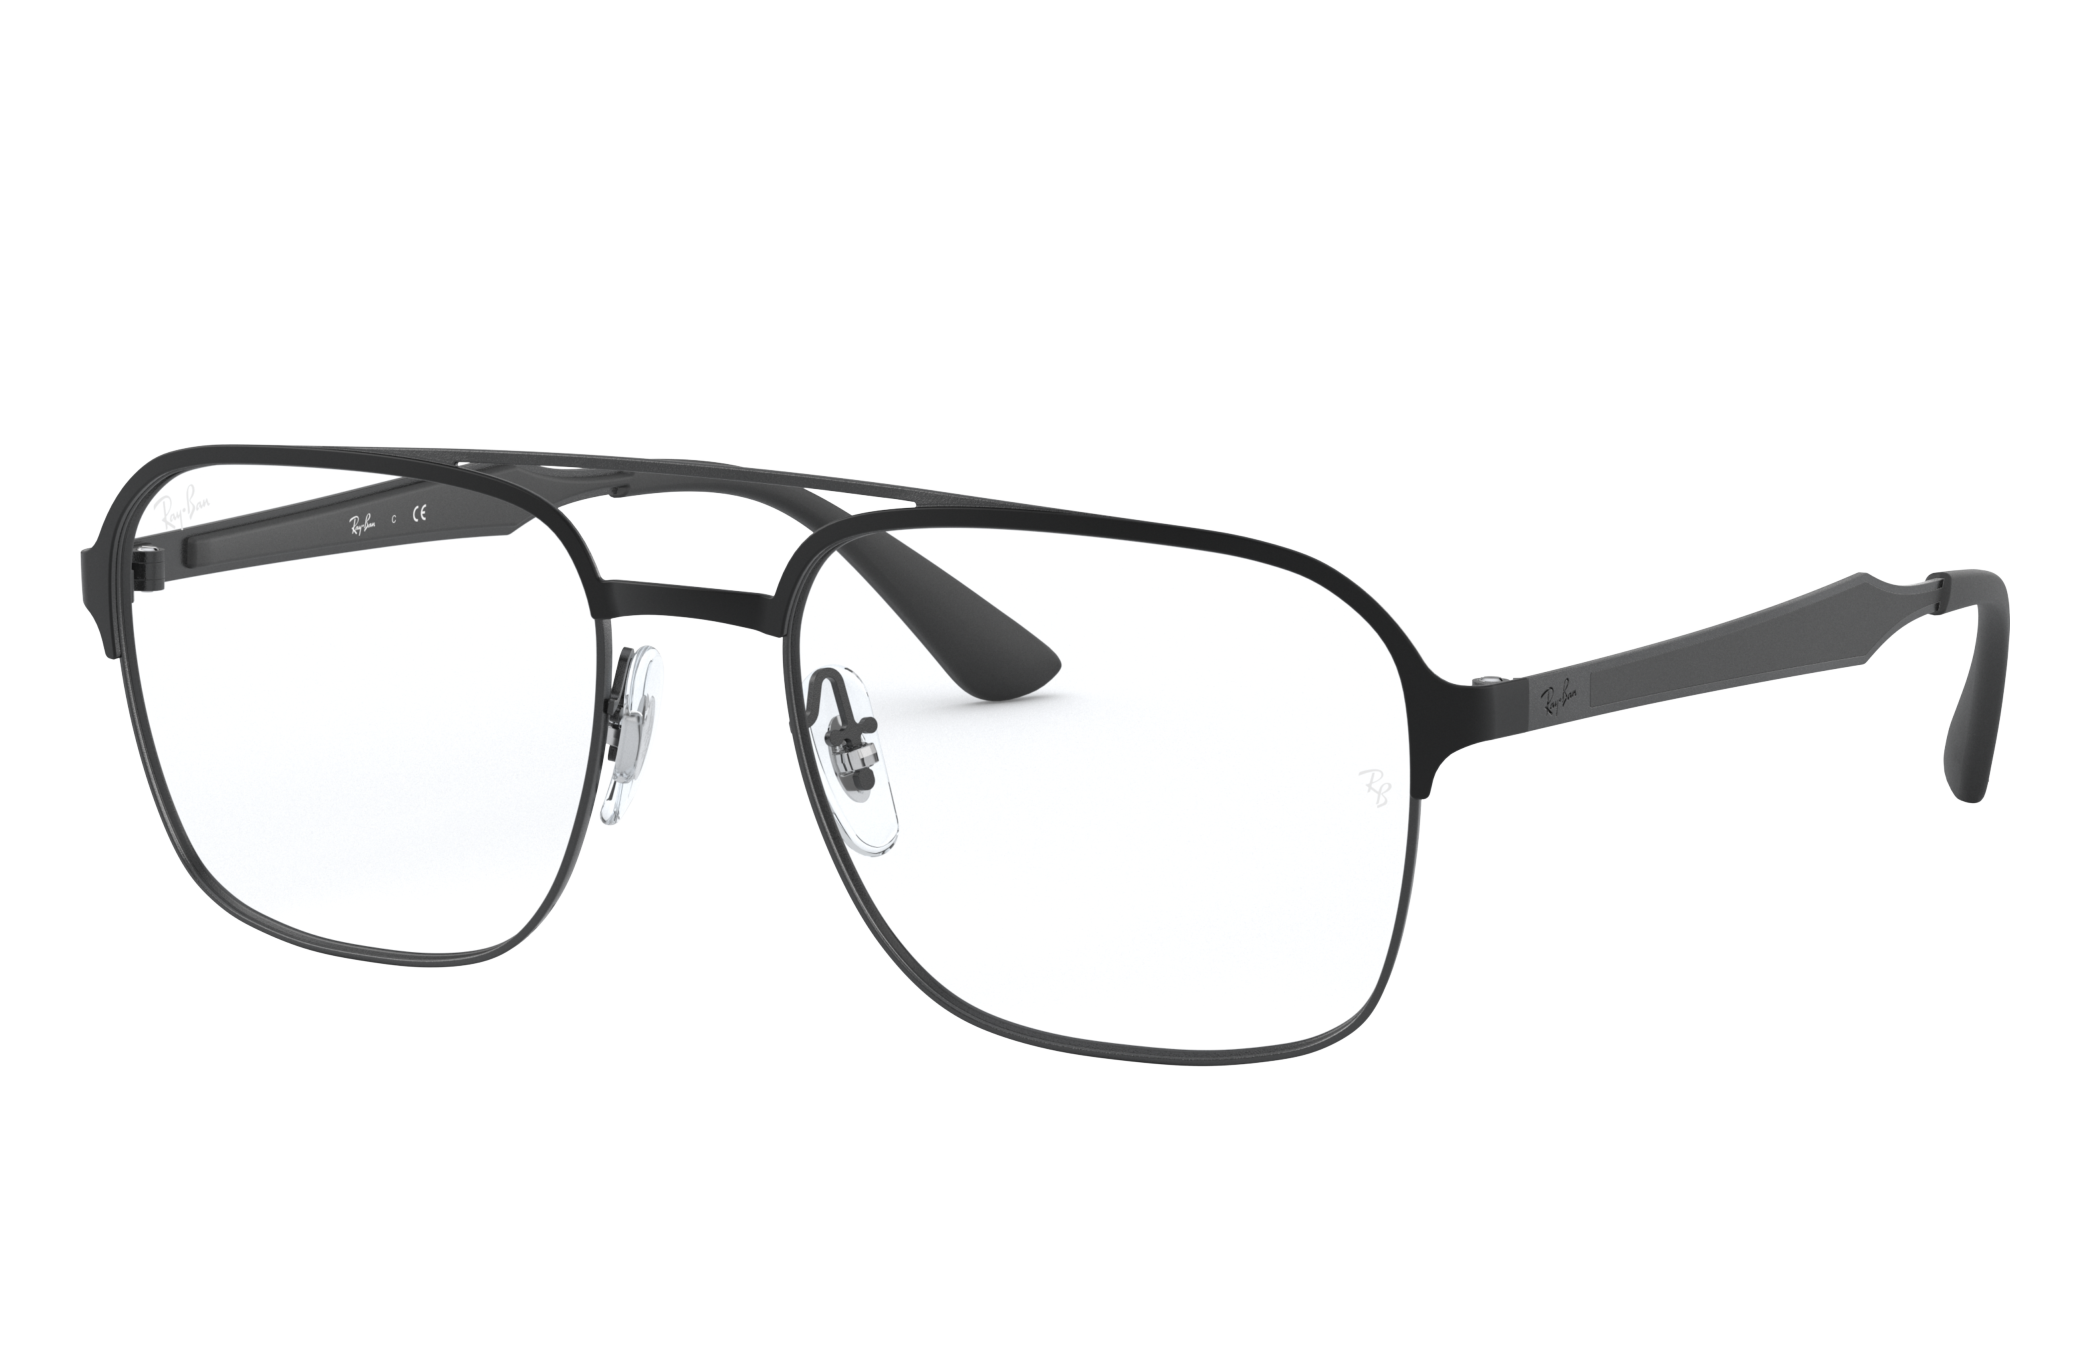 Rb6404 Eyeglasses with Black Frame | Ray-Ban®